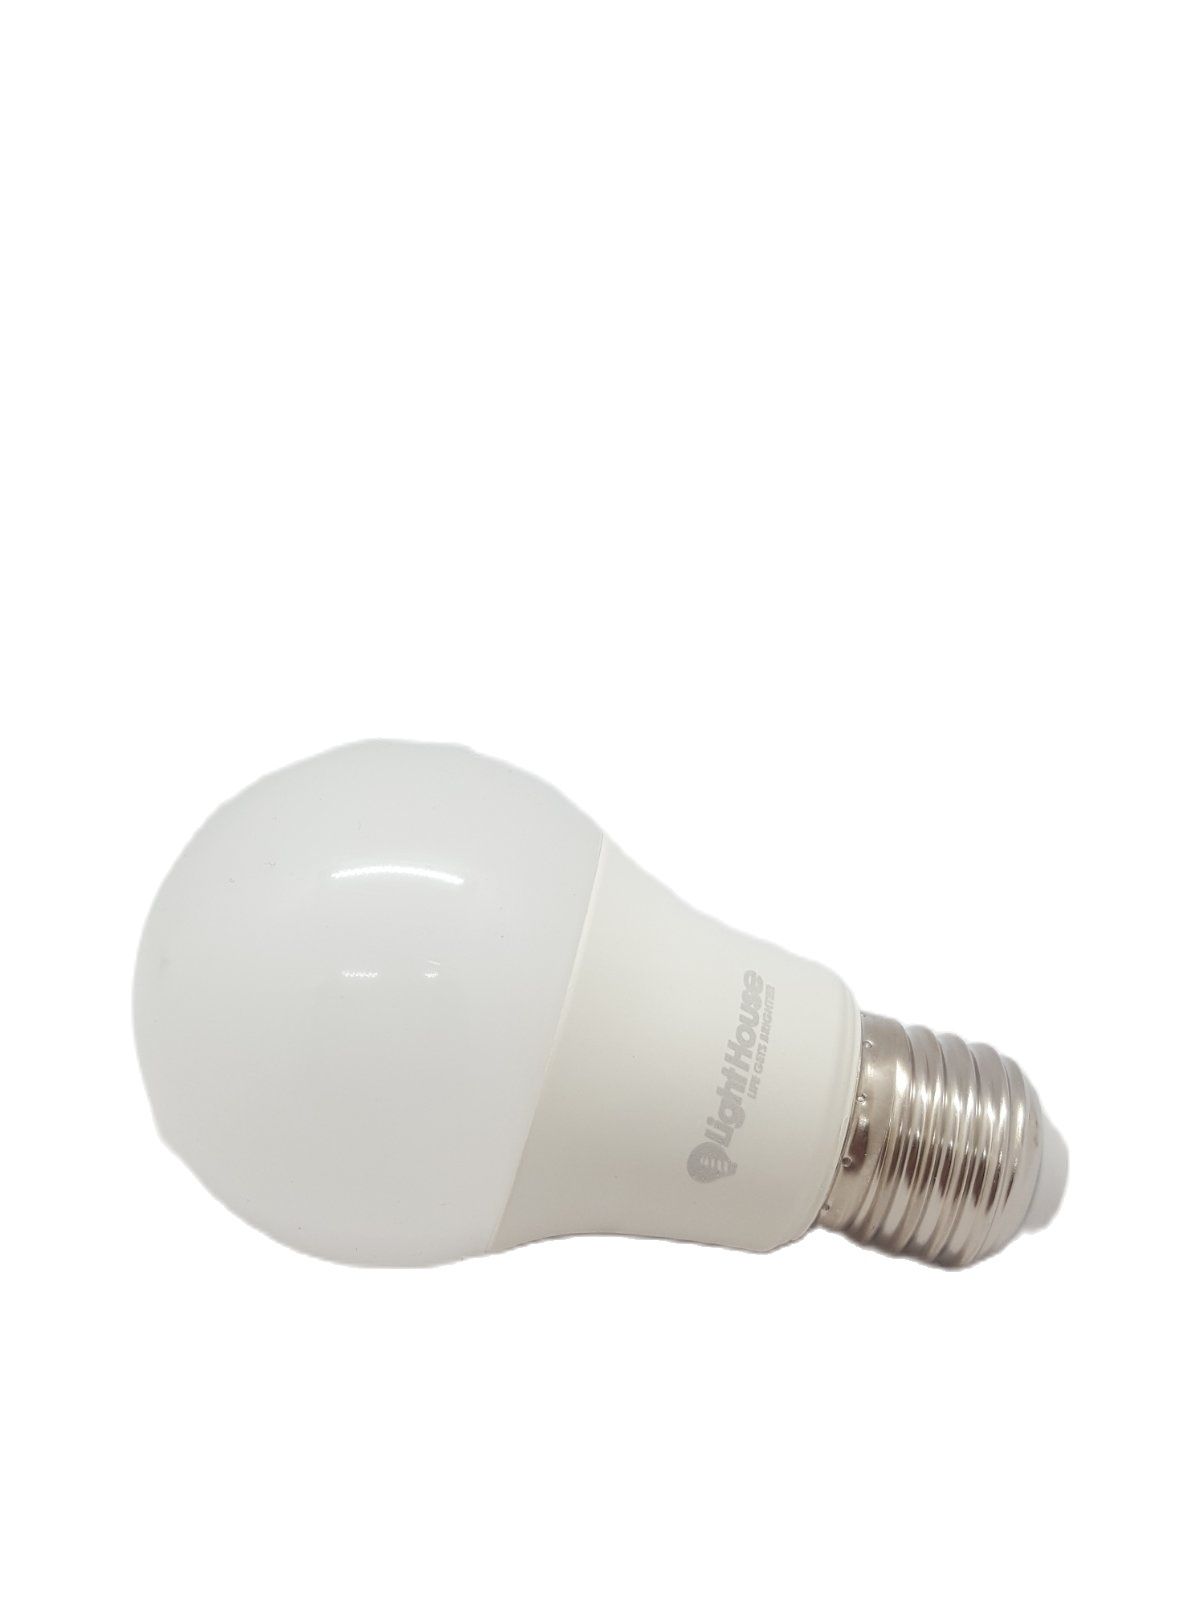 LIGHTHOUSE LED LHGU10-4W-WW Lamp 350 Lumens 4W